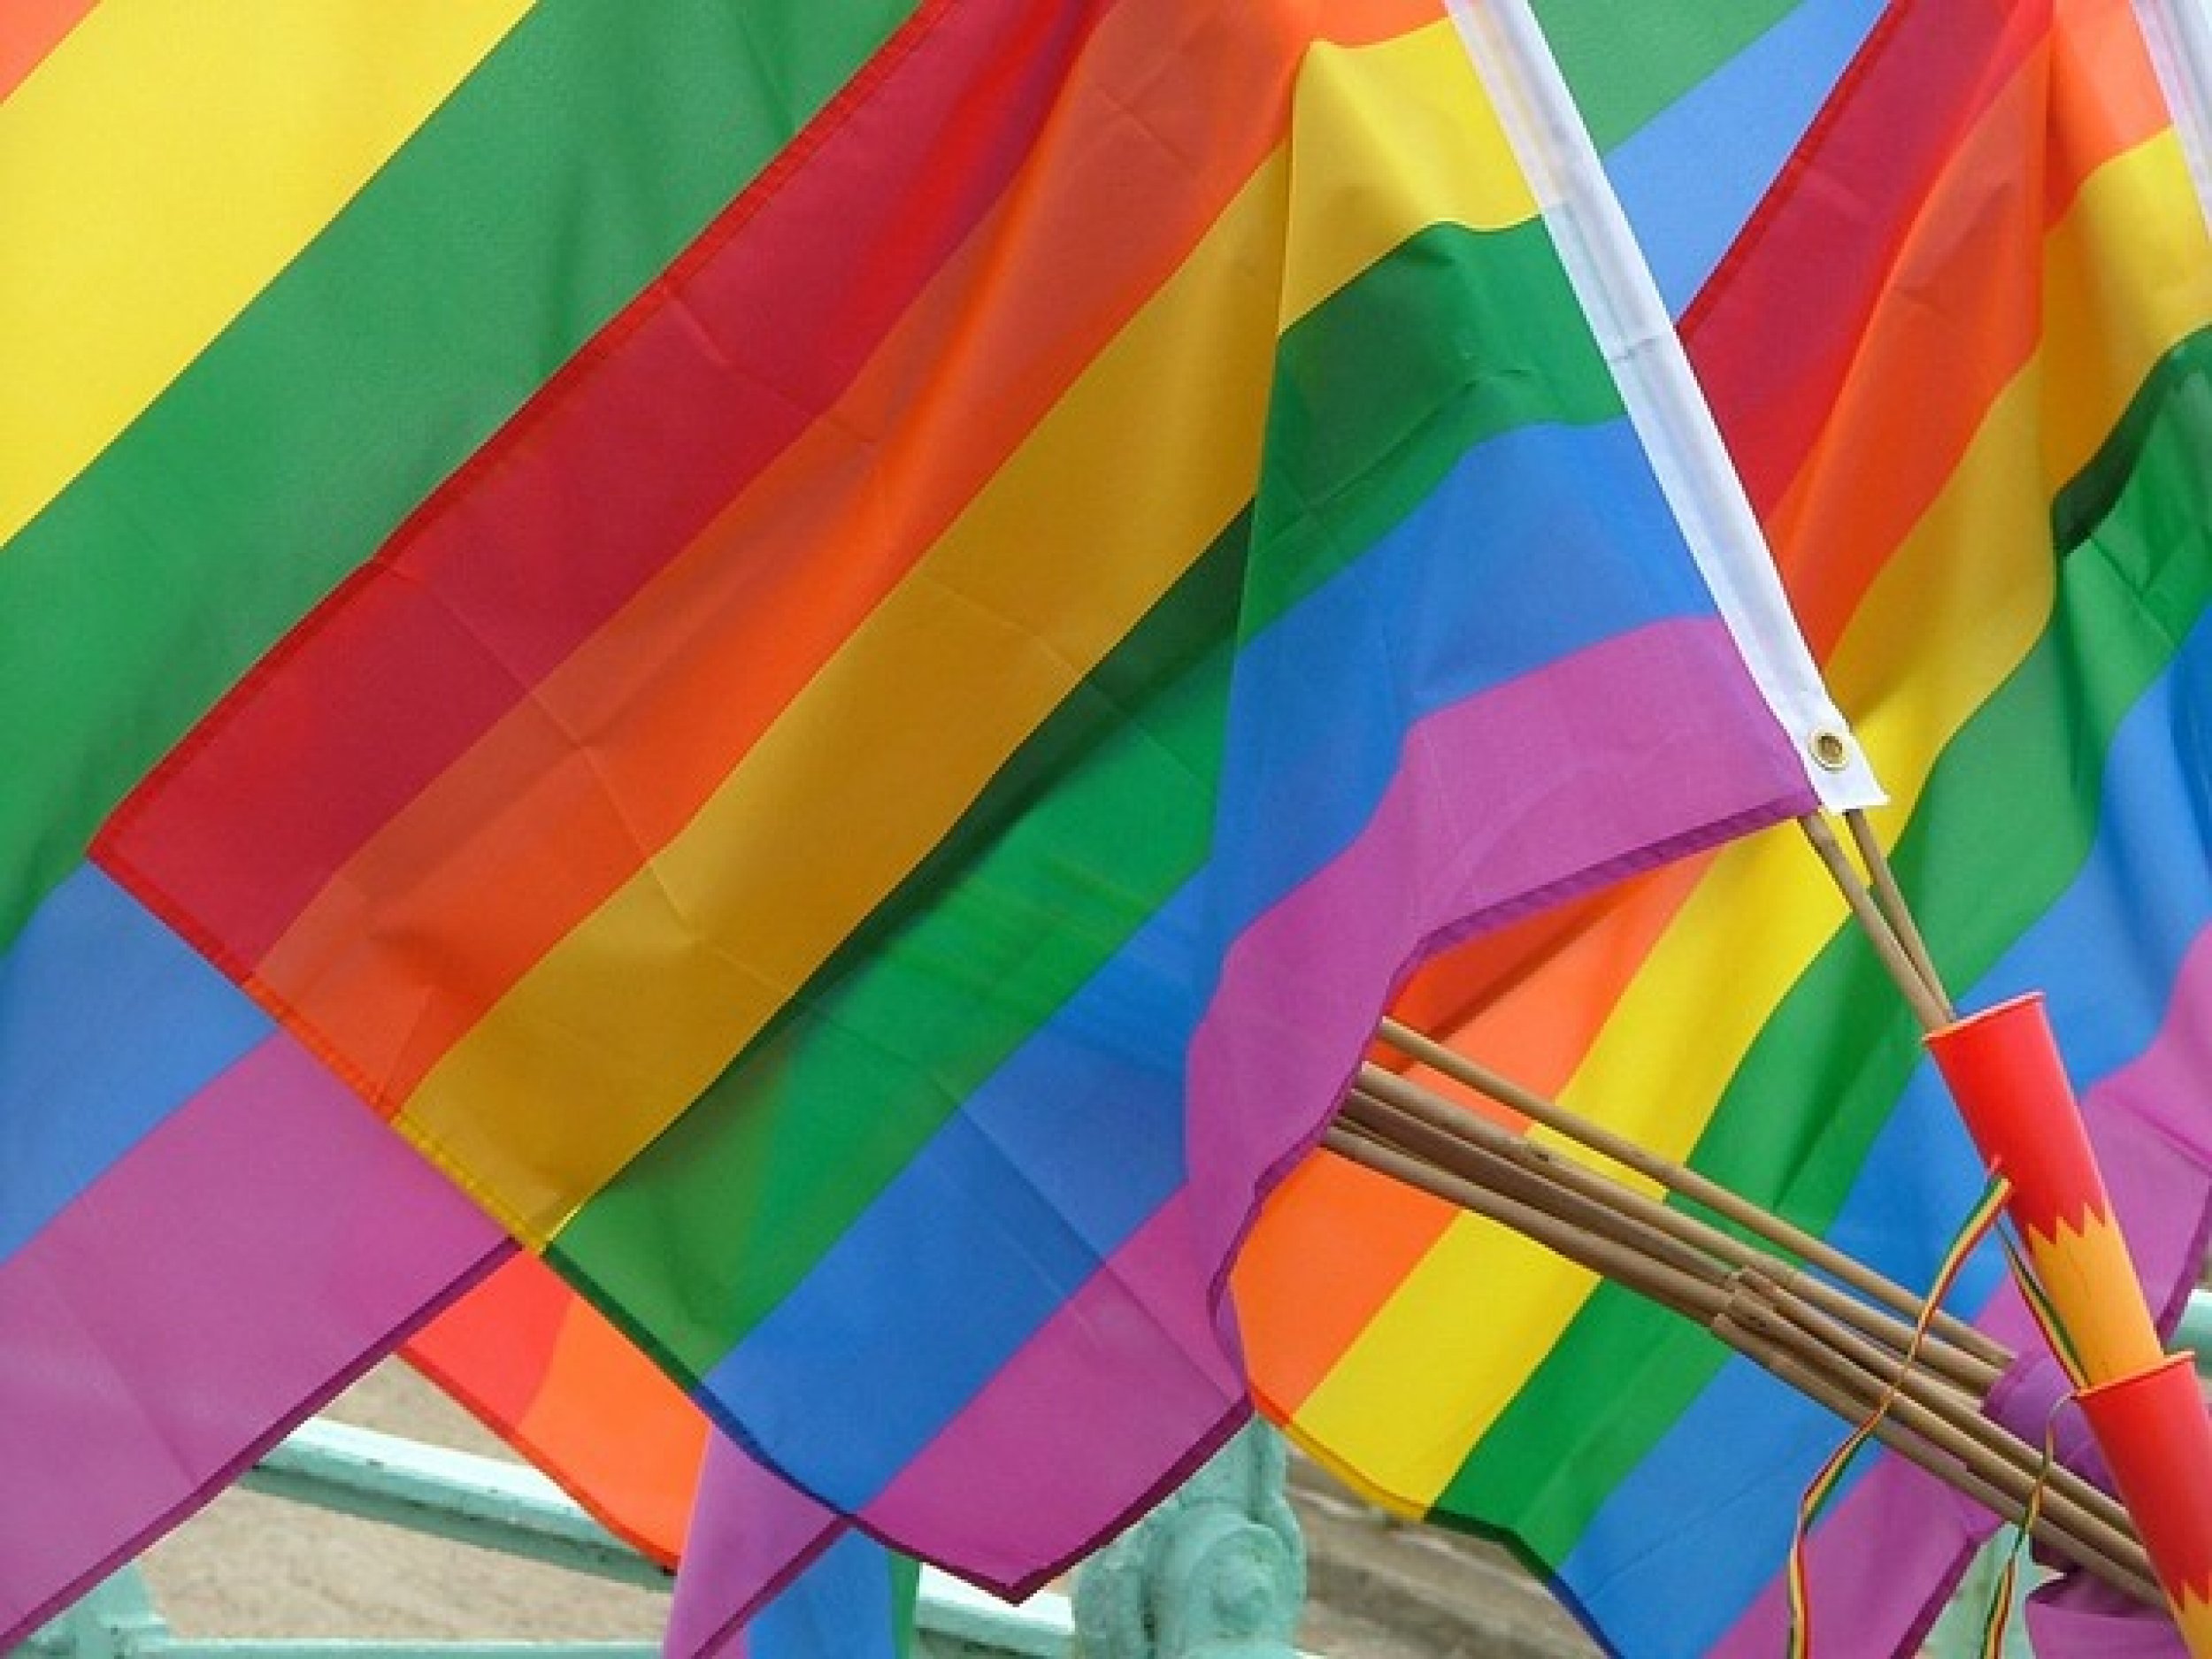 Над портом реяли разноцветные флаги. Разноцветные флажки. Разноцветный флаг. Разноцветные знамена.